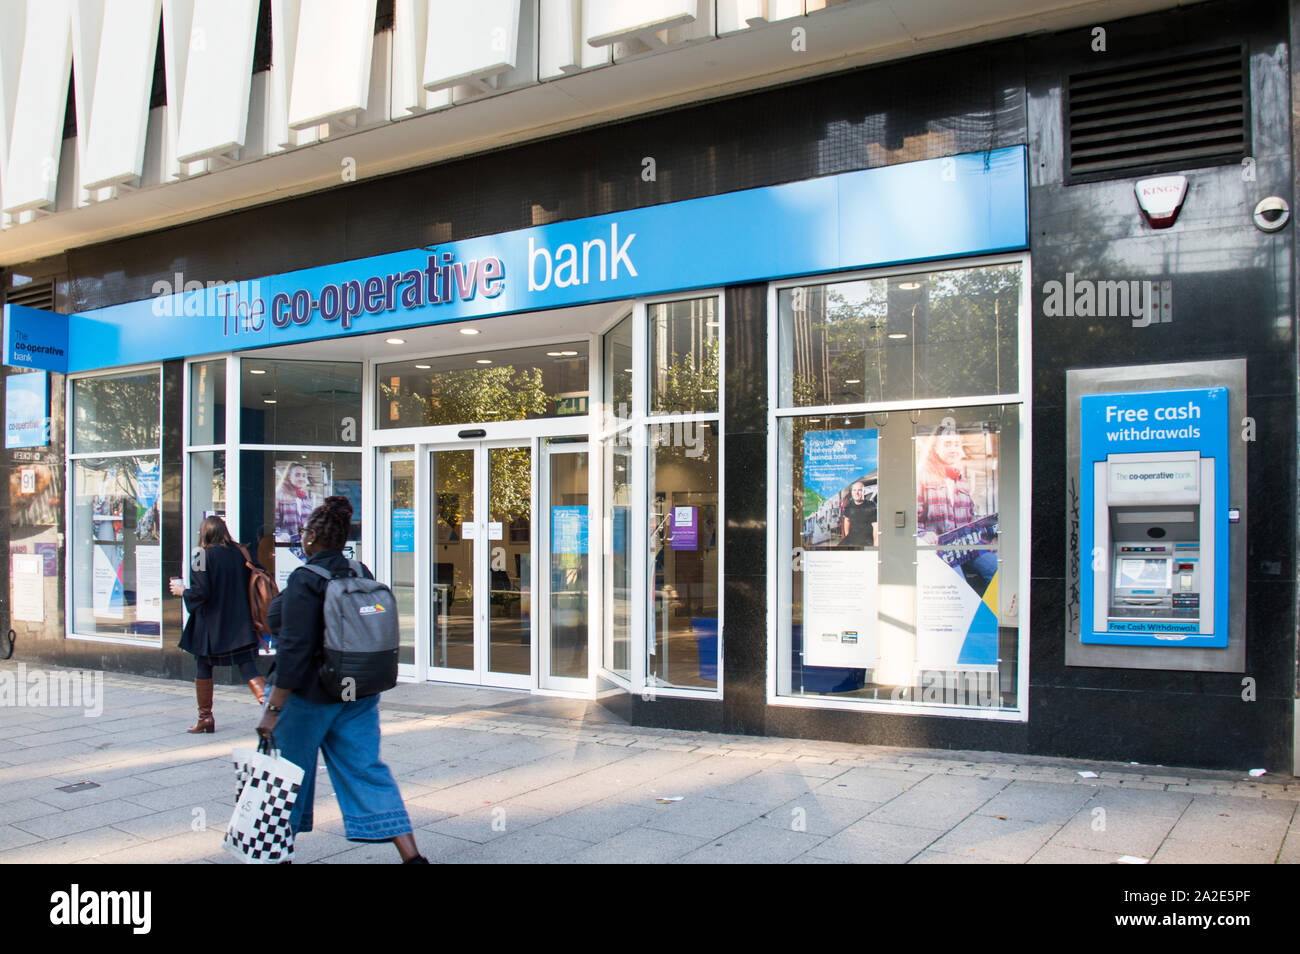 A co-operative bank branch in Croydon high street Stock Photo